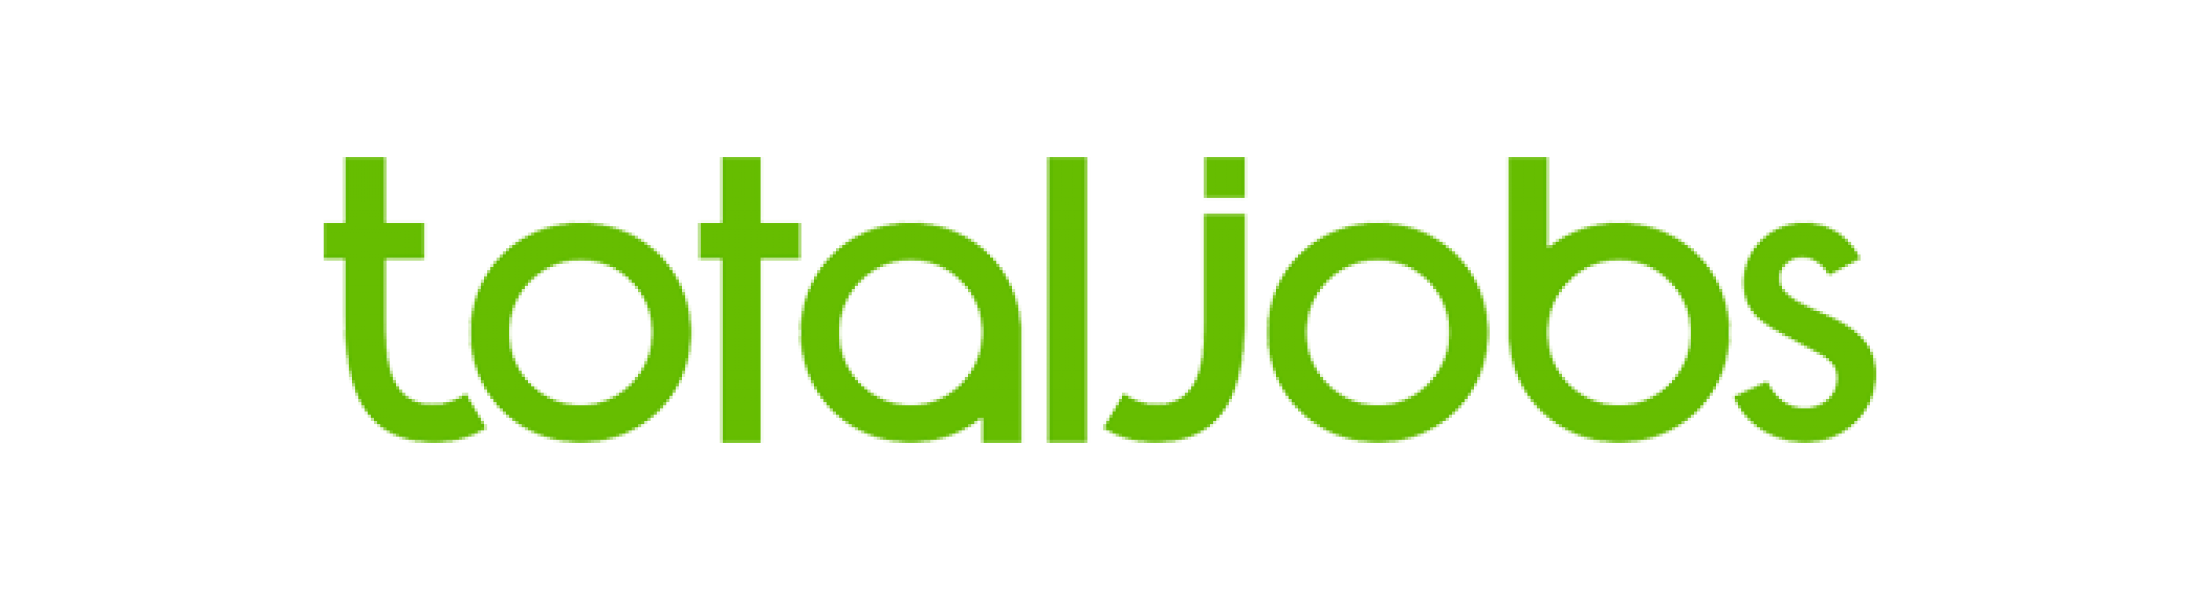 Total uk. Odd jobs логотип. Dinur jobs logo. Tech jobs logo. Job search logo.